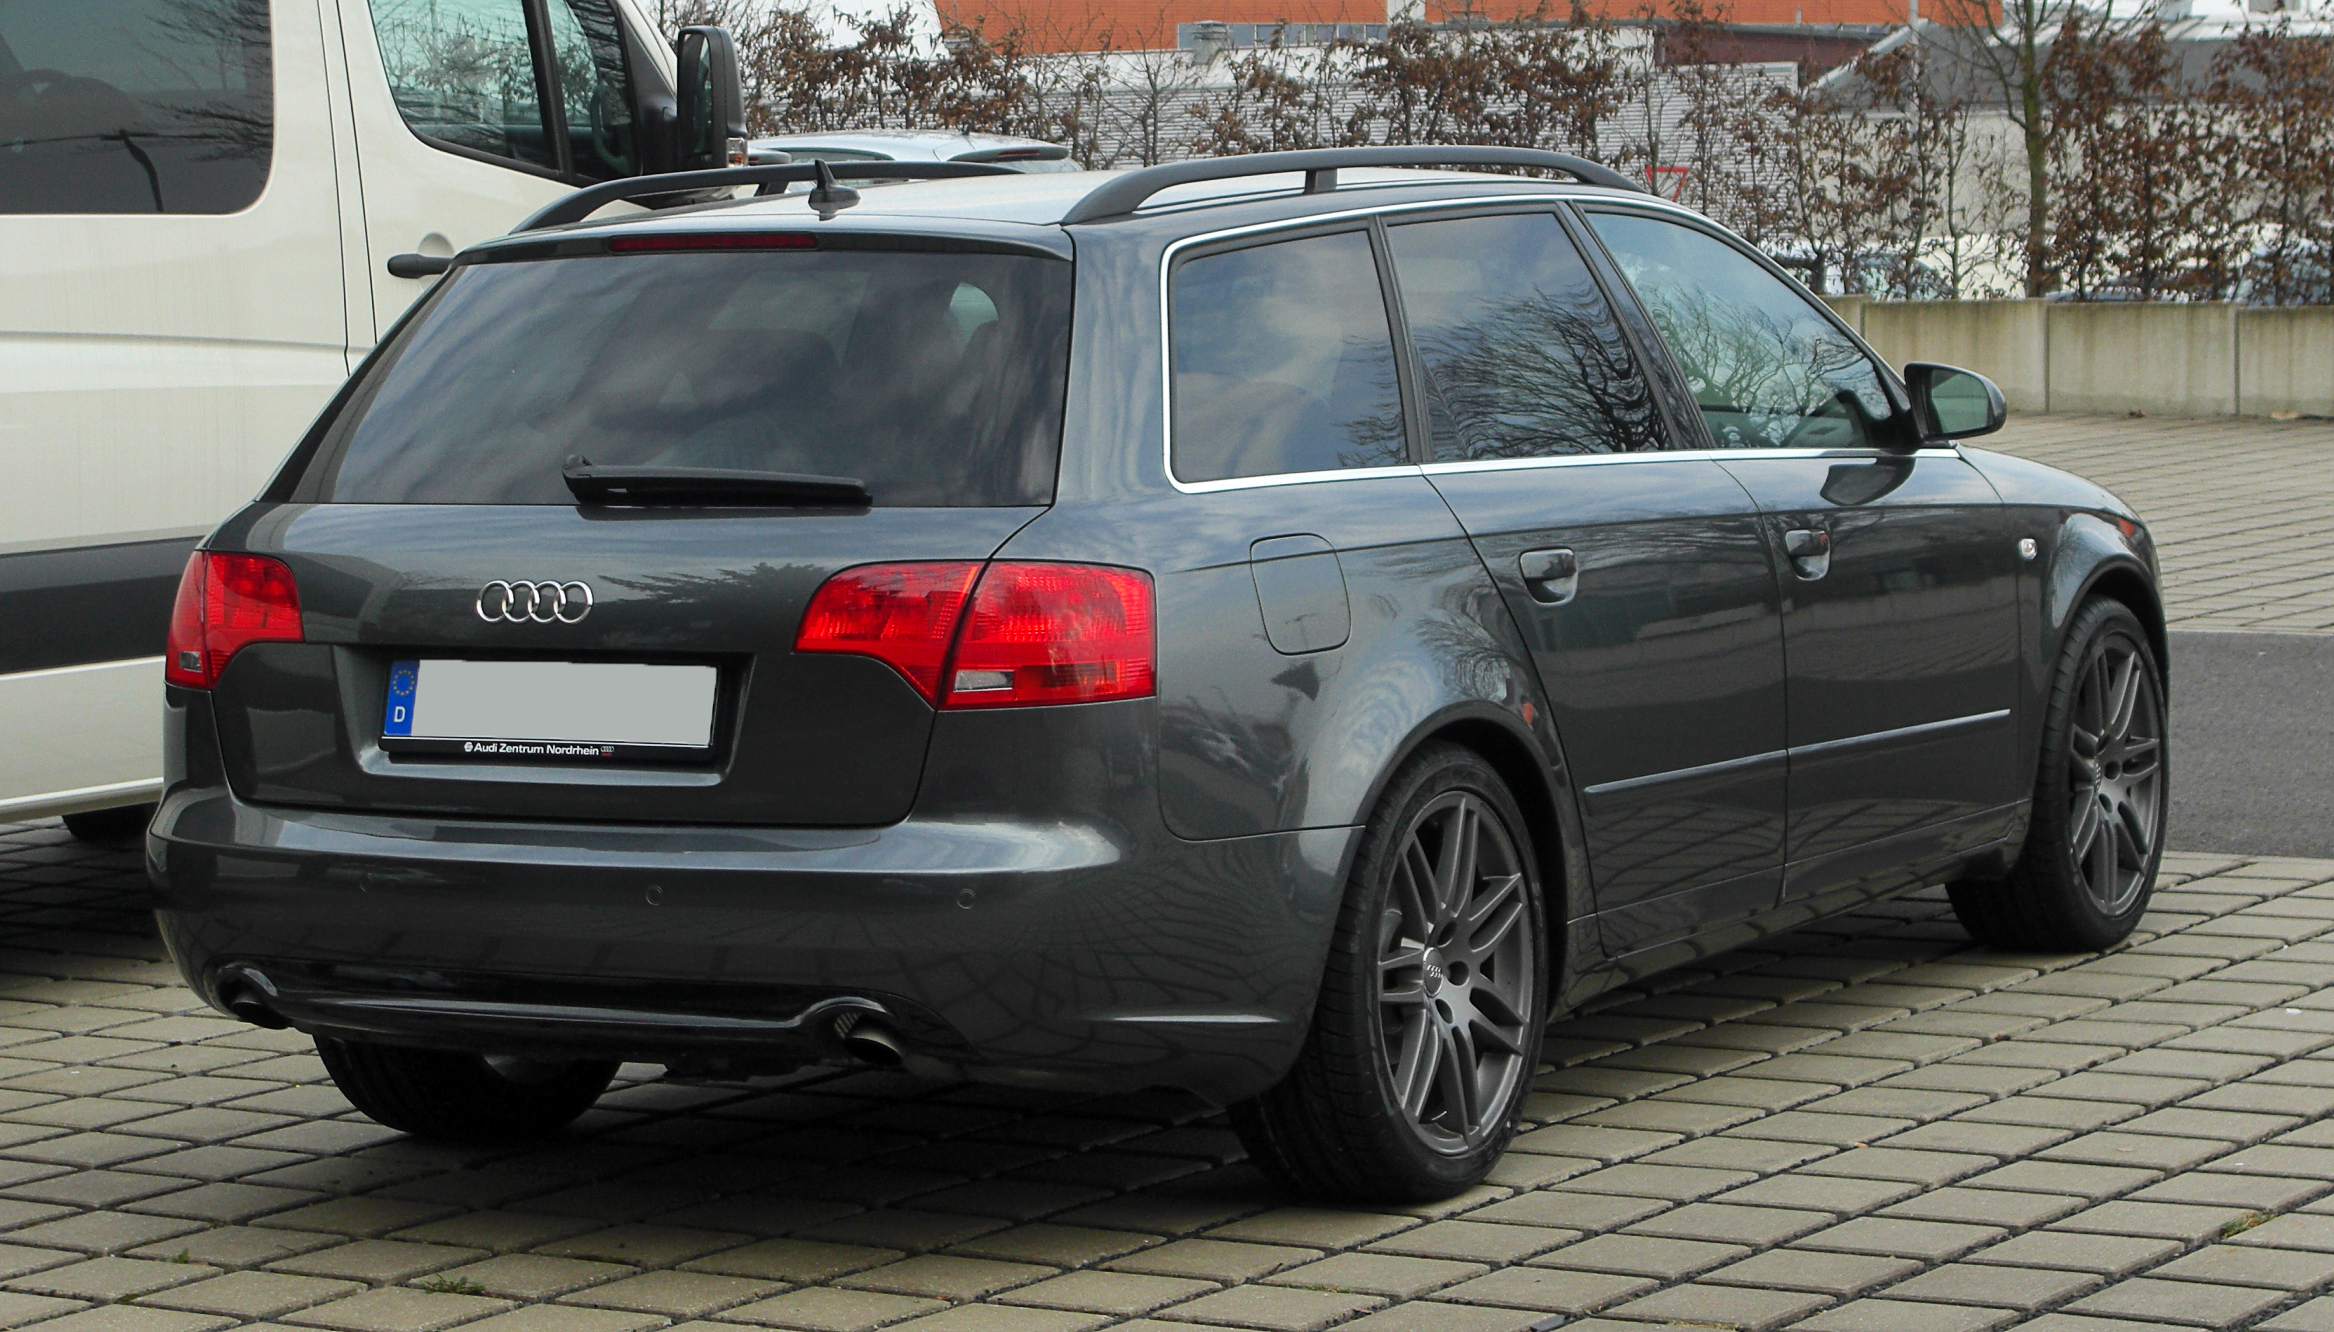 File:Audi-A4-Avant-B7.jpg - Wikipedia